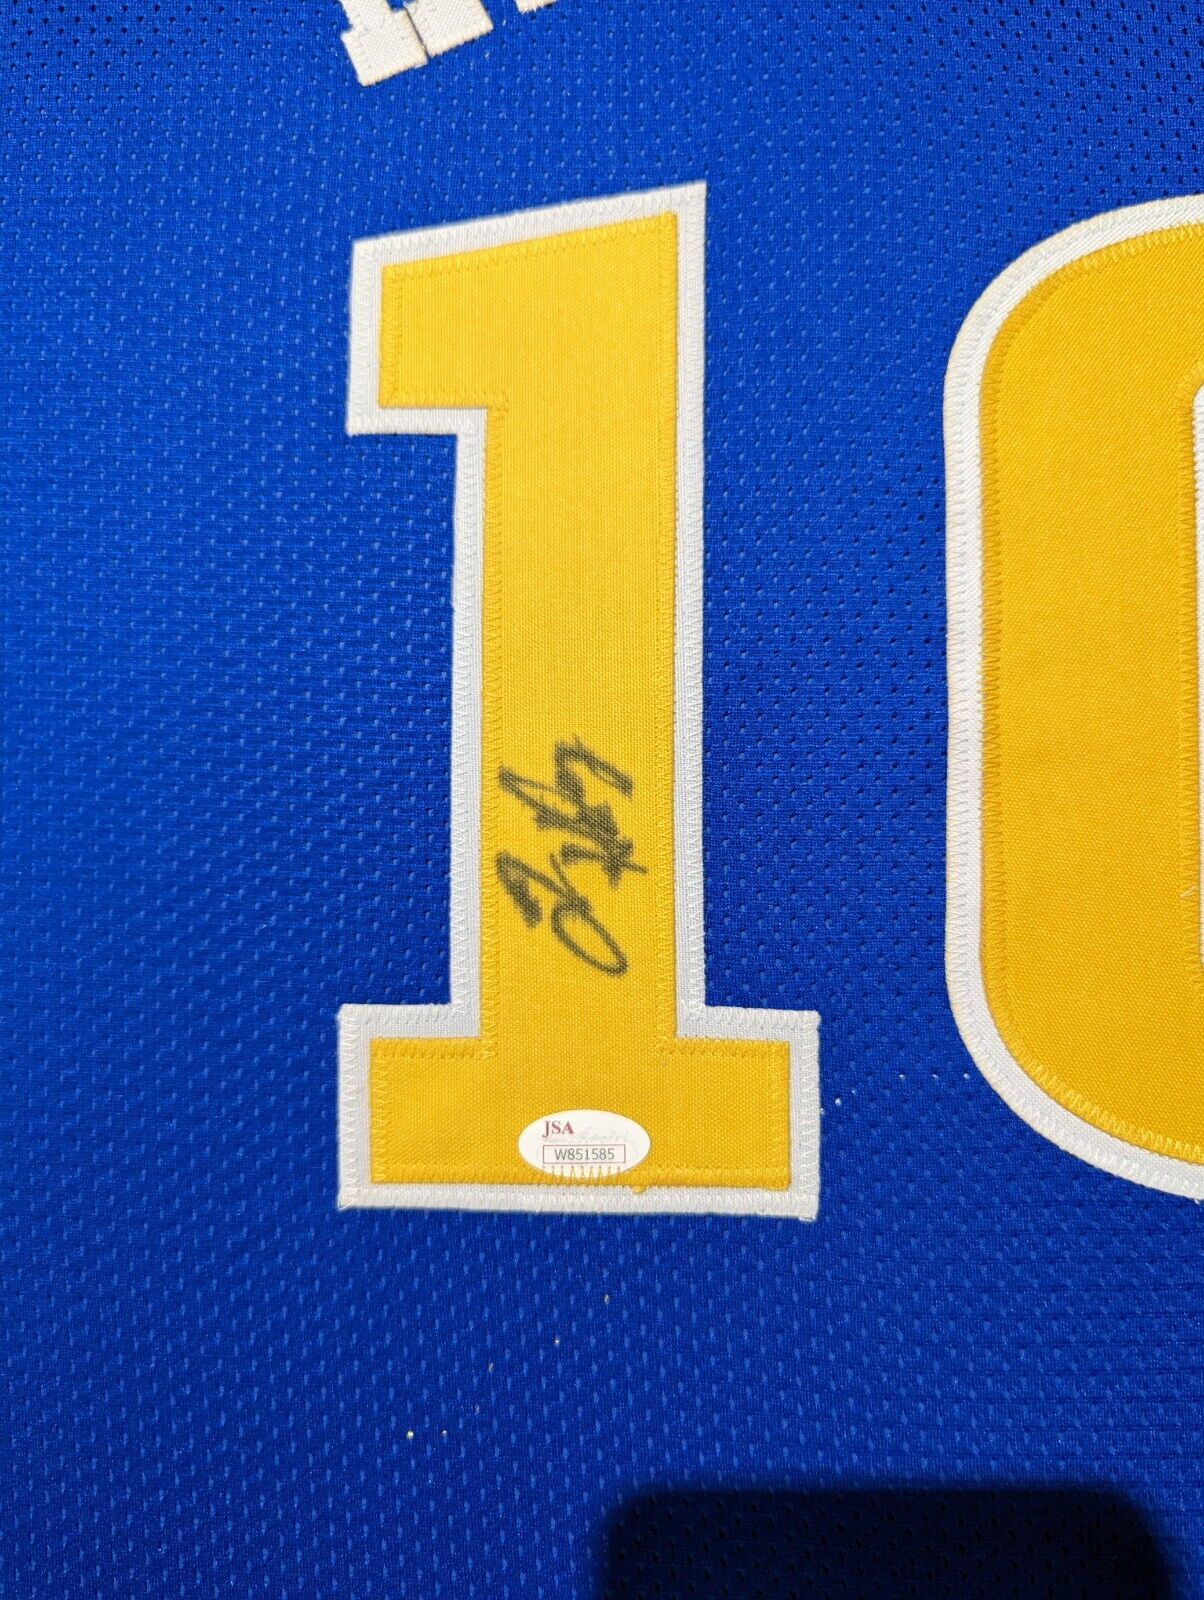 MVP Authentics Framed Golden State Warriors Tim Hardaway Autographed Signed Jersey Jsa Coa 405 sports jersey framing , jersey framing